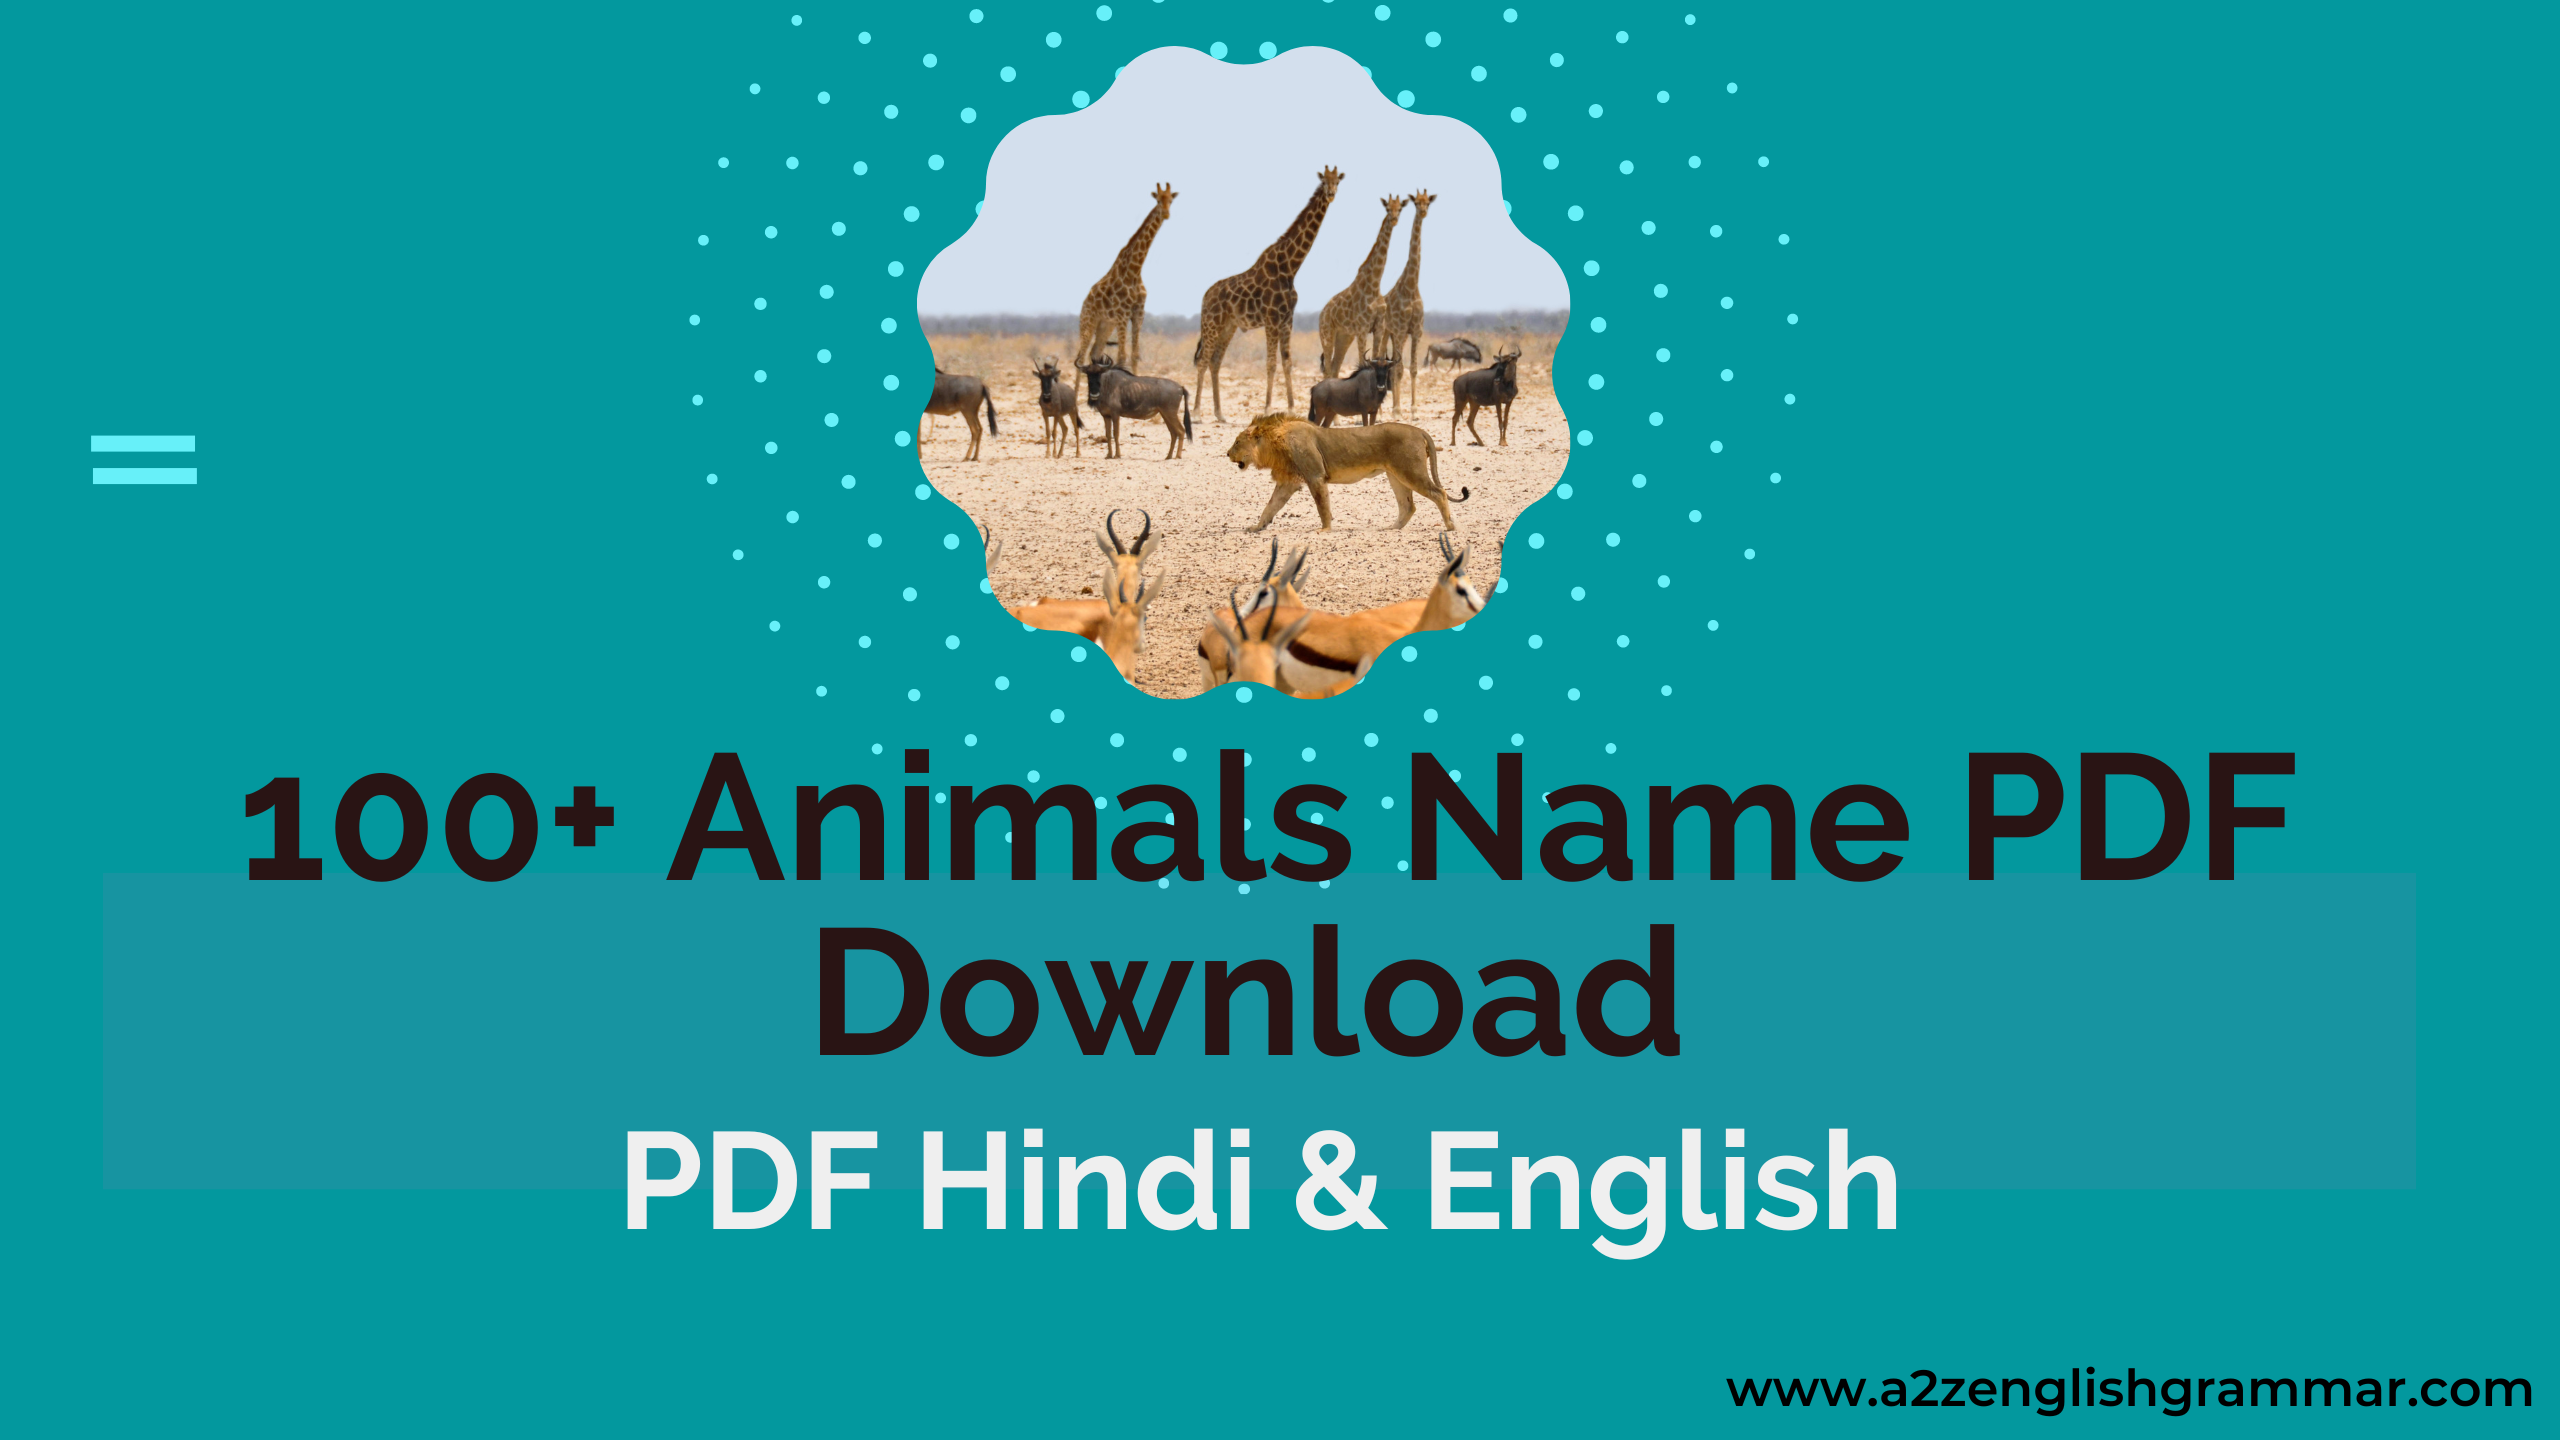 PDF] 100+ Animals Name PDF Download in Hindi & English - a2zenglishgrammar